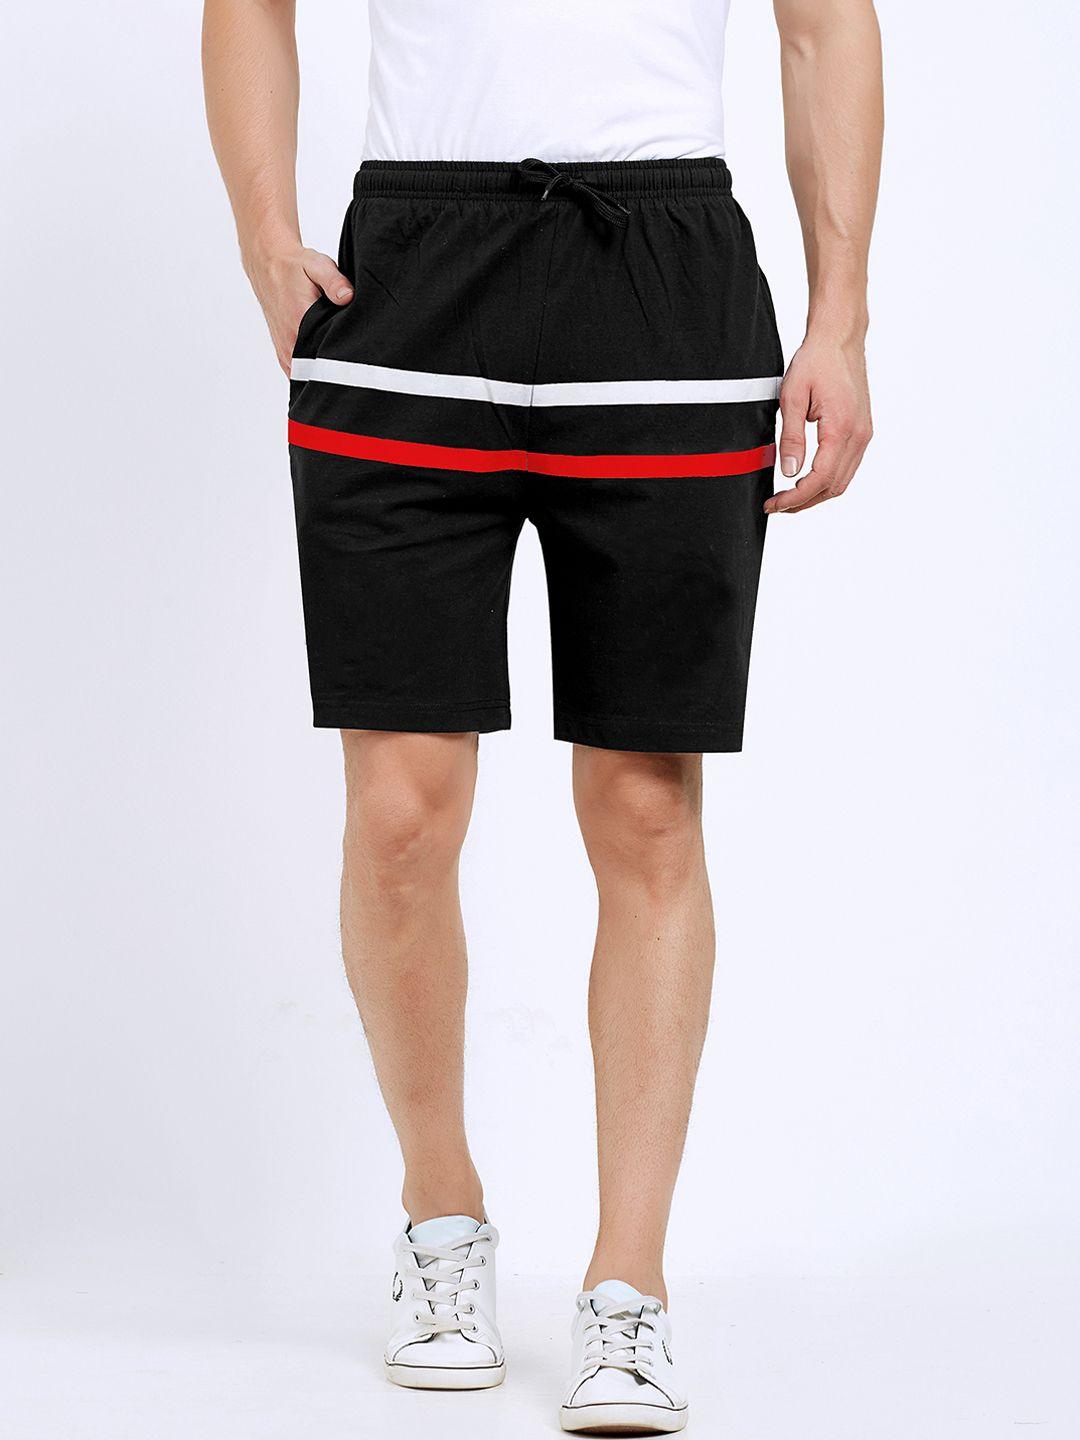 maniac men black & red striped slim fit regular shorts